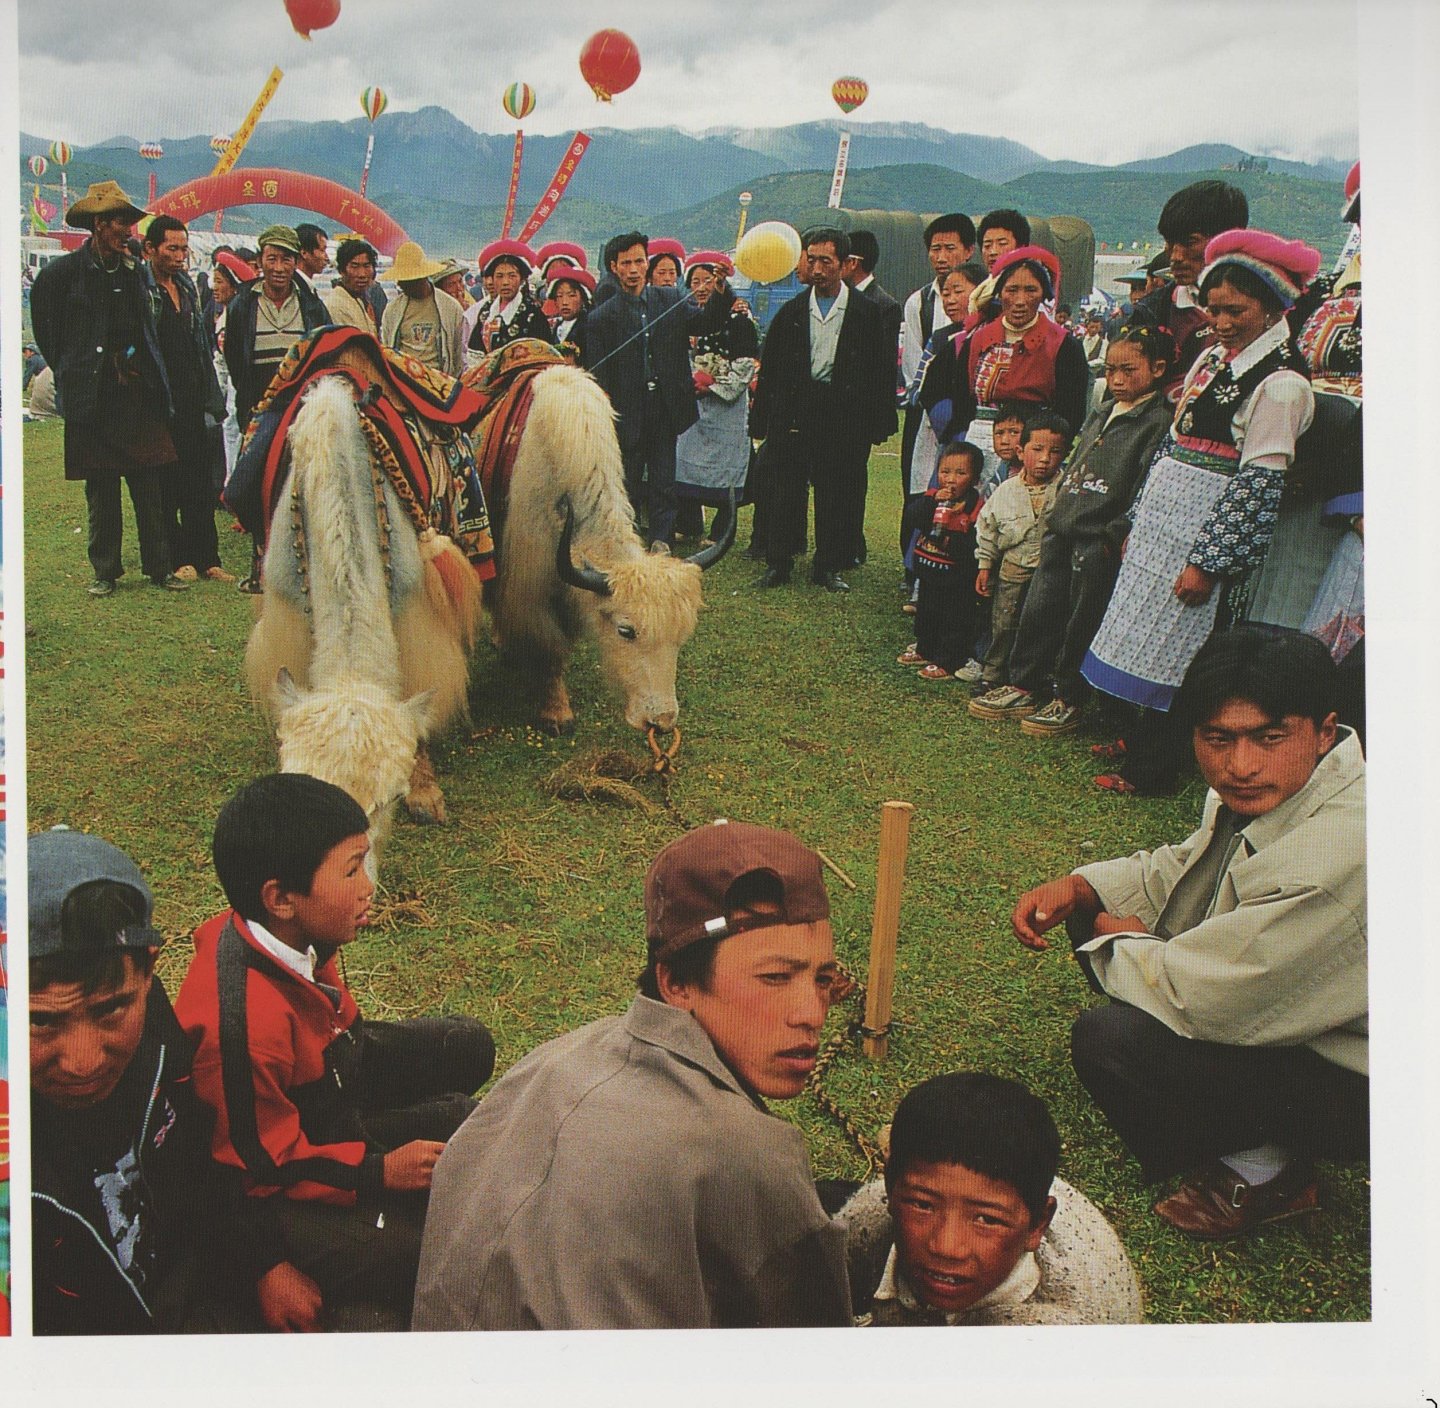 Lam, Jimmy en Tan Ju K - Creater Tibet, Where earth touches the heavens